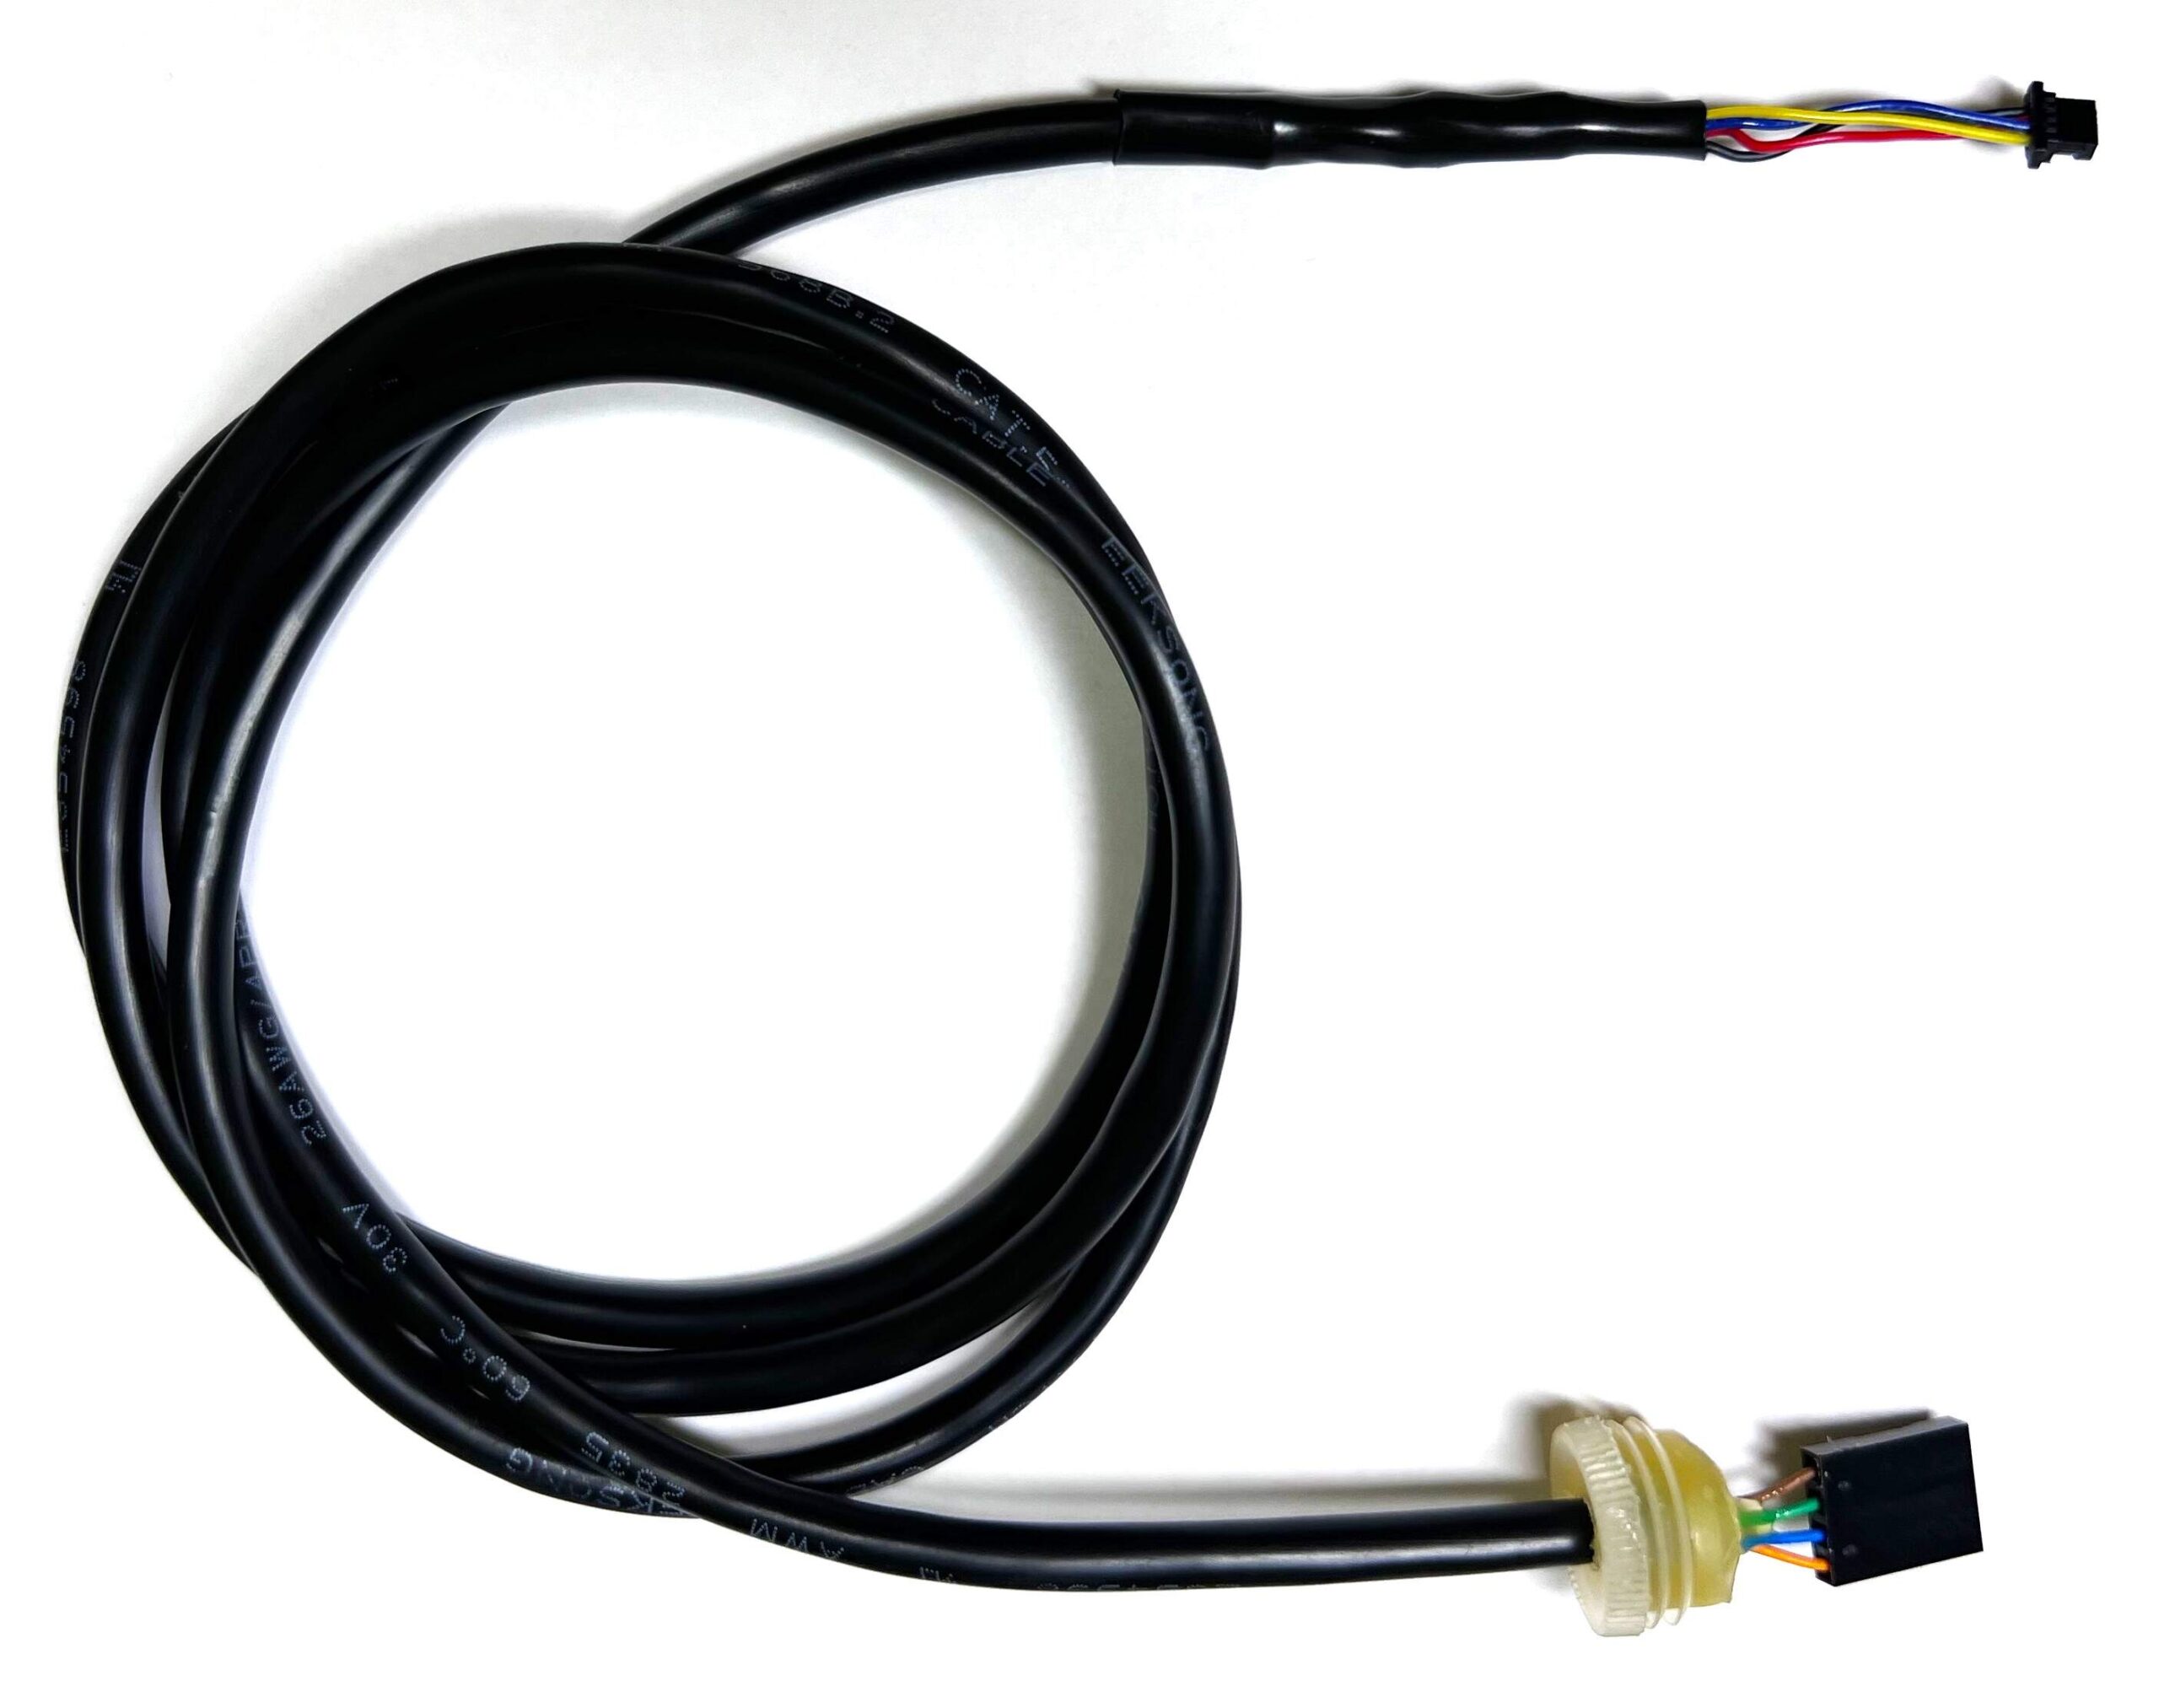 Light Intensity sensor cable preparation